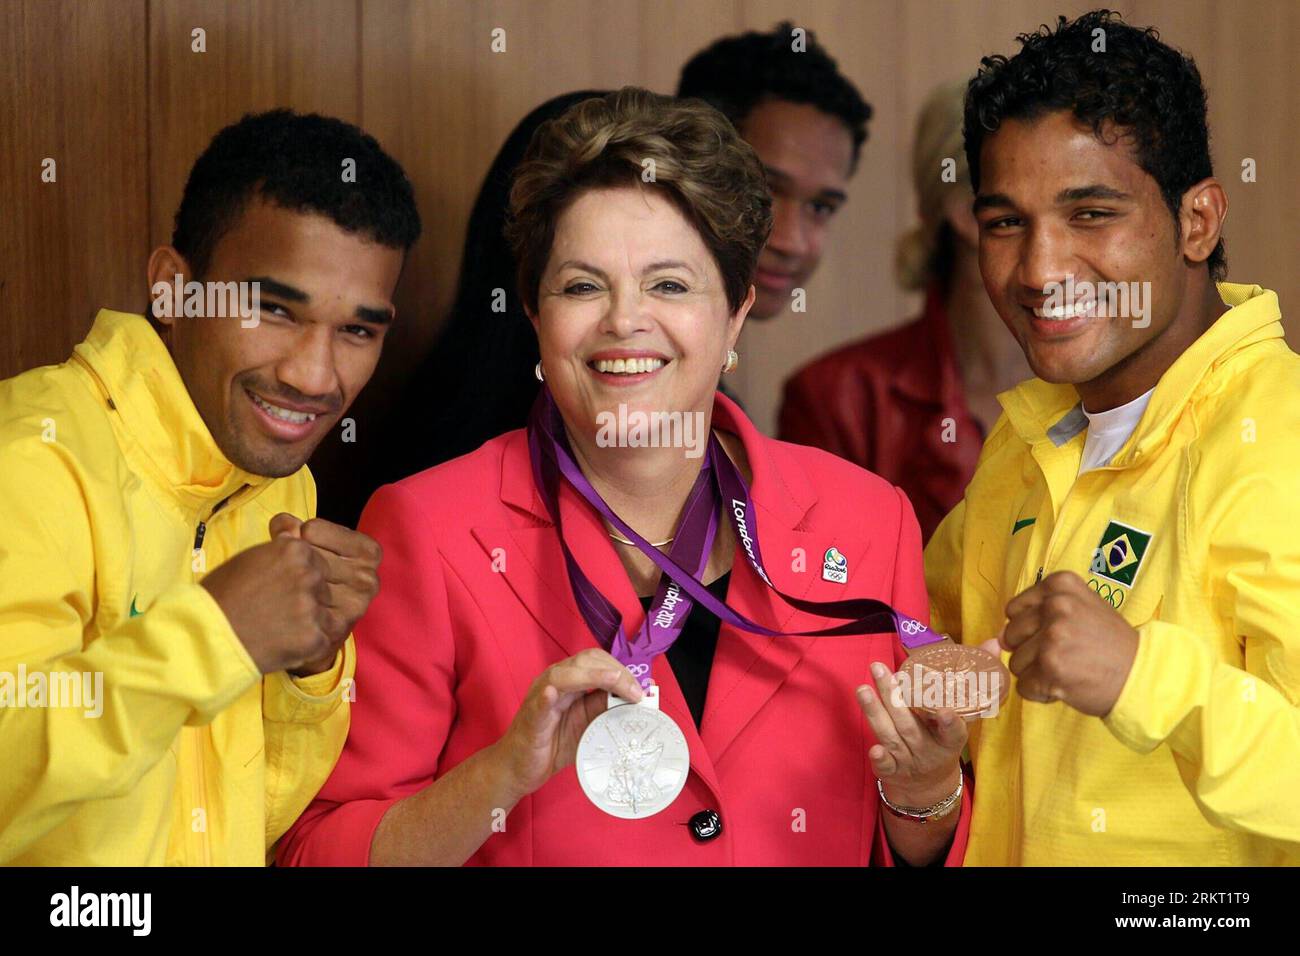 Bildnummer: 58349366  Datum: 14.08.2012  Copyright: imago/Xinhua (120815) -- BRASILIA, Aug. 15, 2012 (Xinhua) -- Brazilian President Dilma Rousseff (C) poses for a photograph with London 2012 Olympic Games silver medalist Esquiva Falcao (L) and gold medalist Yamaguchi Falcao (R) during a ceremony to present the Olympic Flag in Brasilia, capital of Brazil, on August 14, 2012. (Xinhua/Ivaldo Cavalcante/AGENCIA ESTADO) (ae) (tm) BRAZIL-BRASILIA-OLYMPICS-ATHLETES PUBLICATIONxNOTxINxCHN People Politik Empfang Gold Olympiasieg xjh x0x premiumd 2012 quer Highlight      58349366 Date 14 08 2012 Copyri Stock Photo